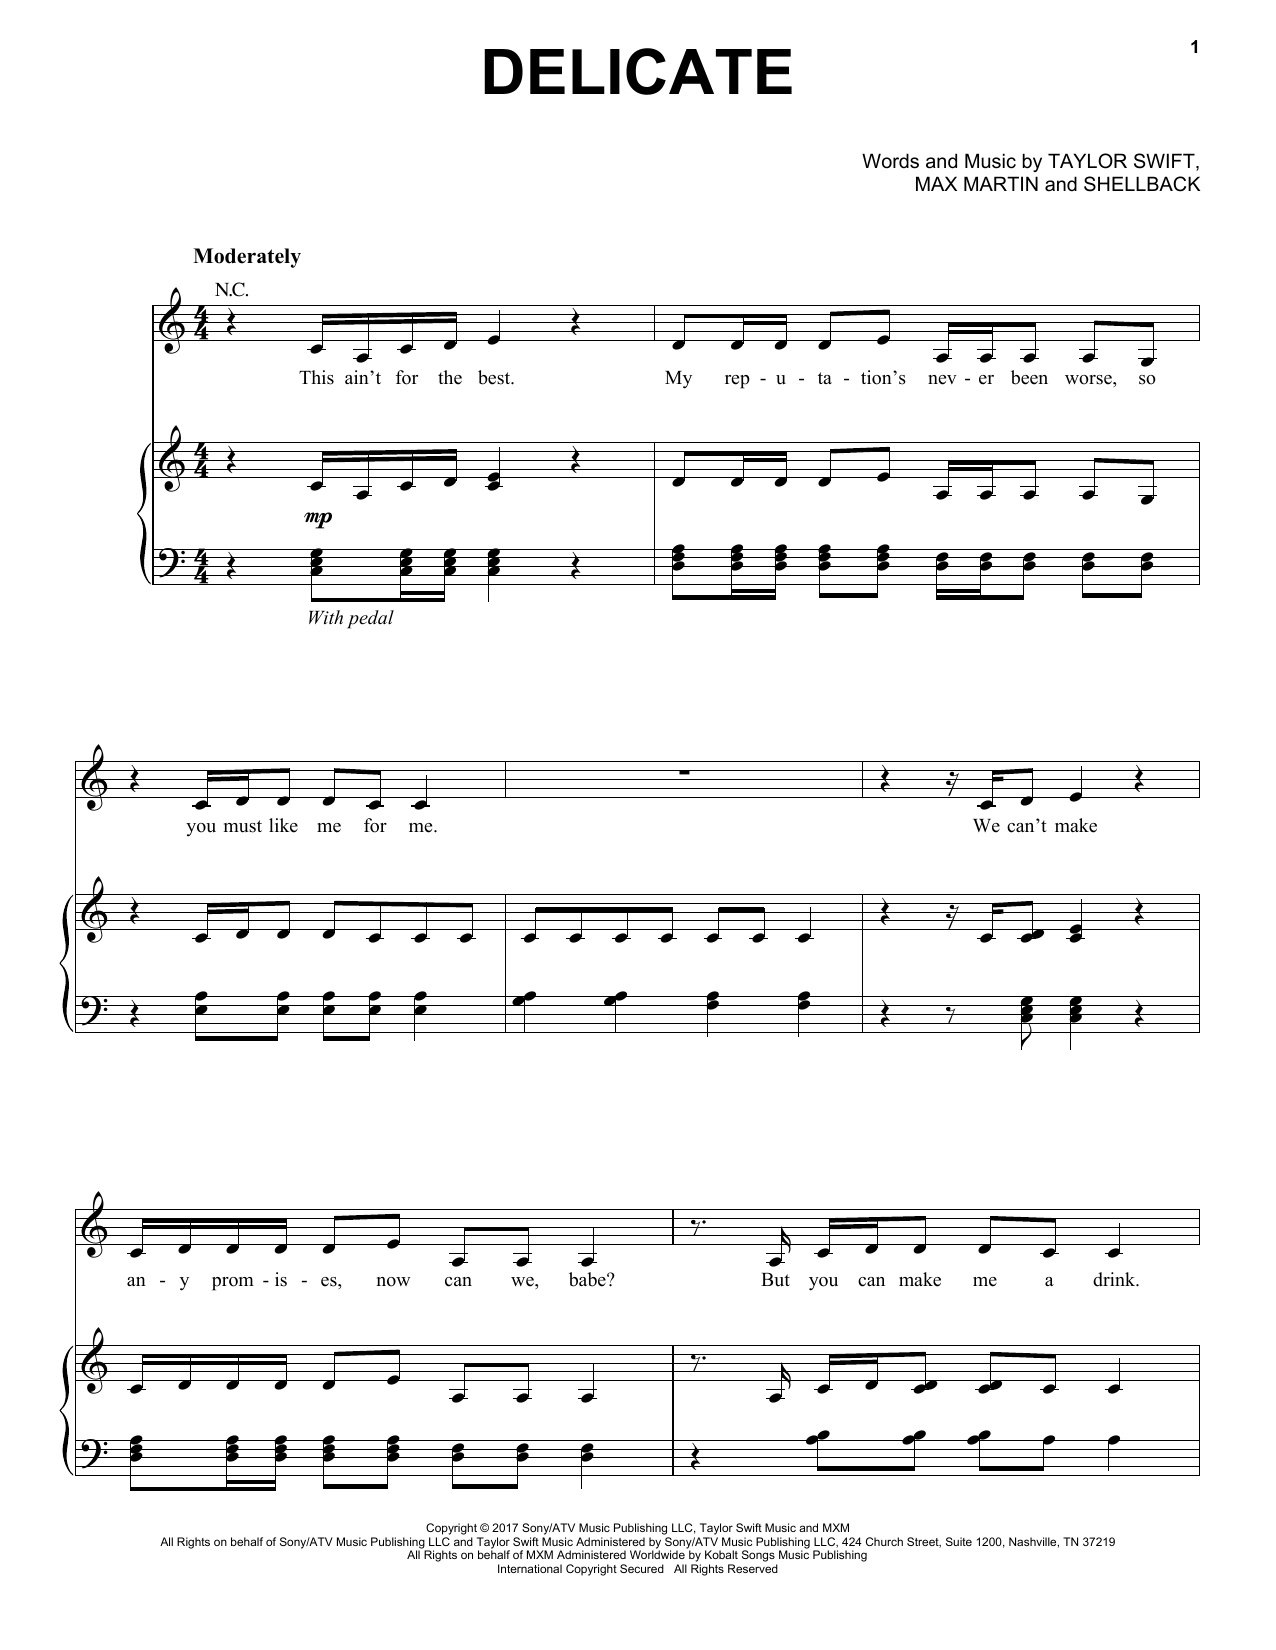 Taylor Swift "Delicate" Sheet Music PDF Notes, Chords | Pop Download Printable. SKU: 255261